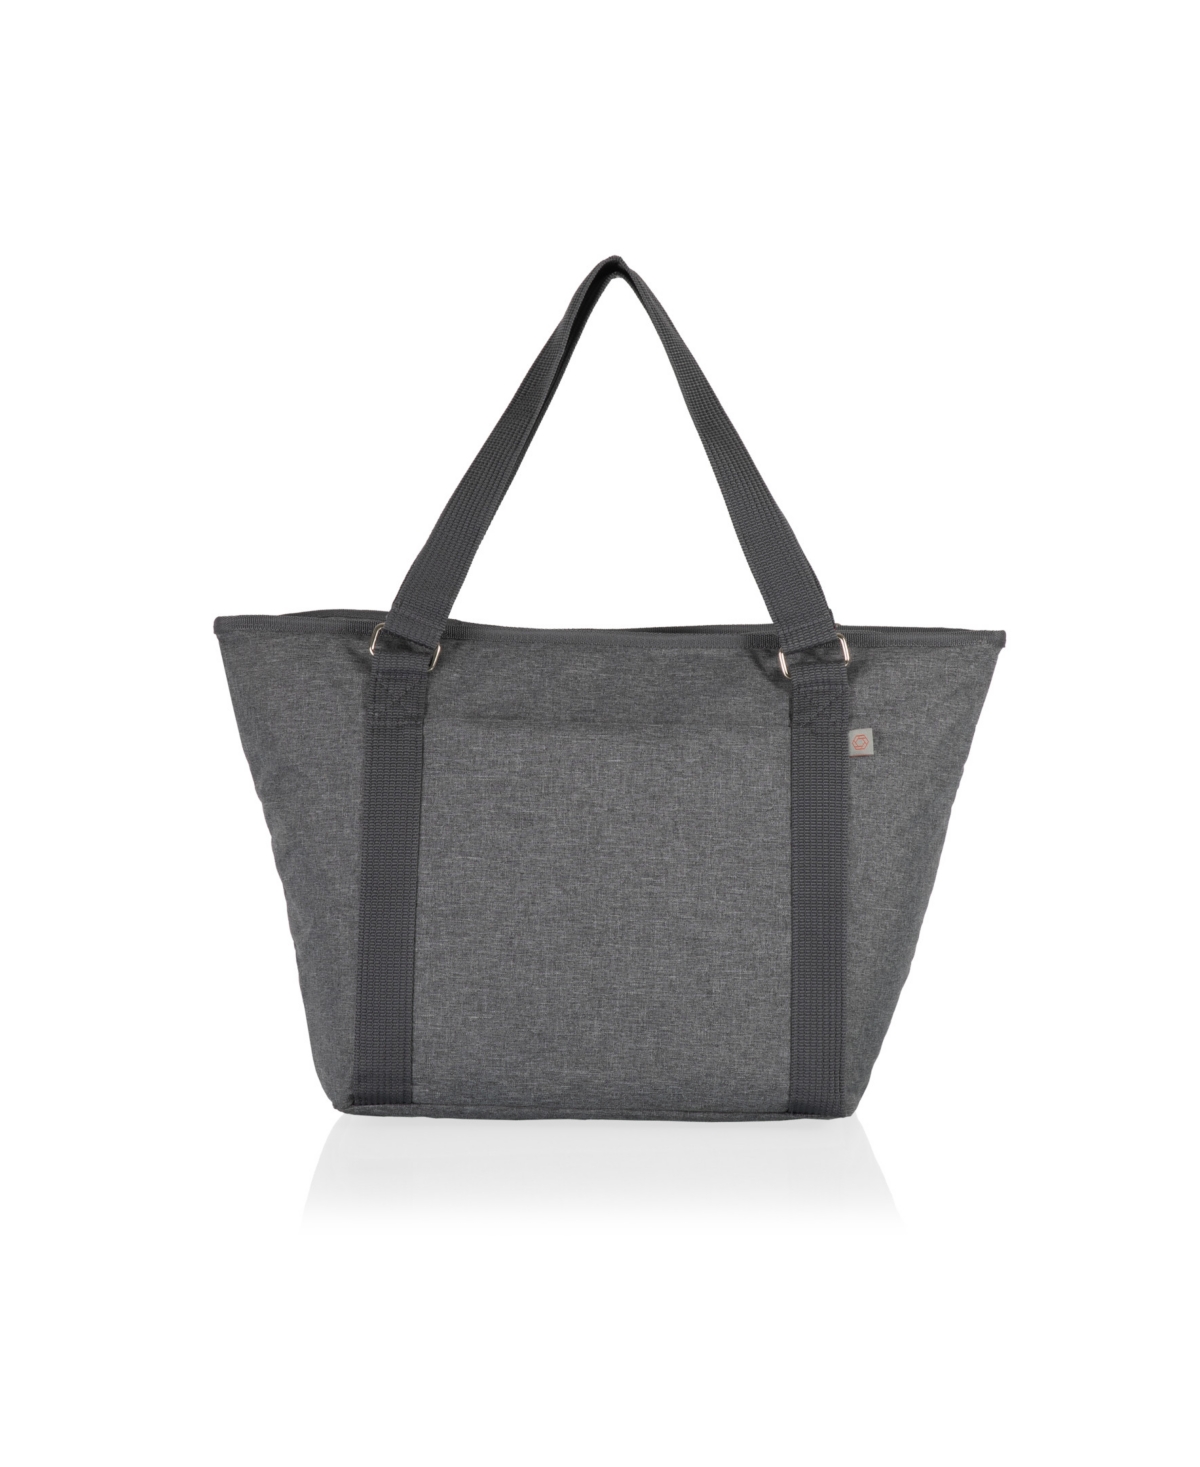 Oniva Topanga Cooler Tote Bag In Heathered Gray